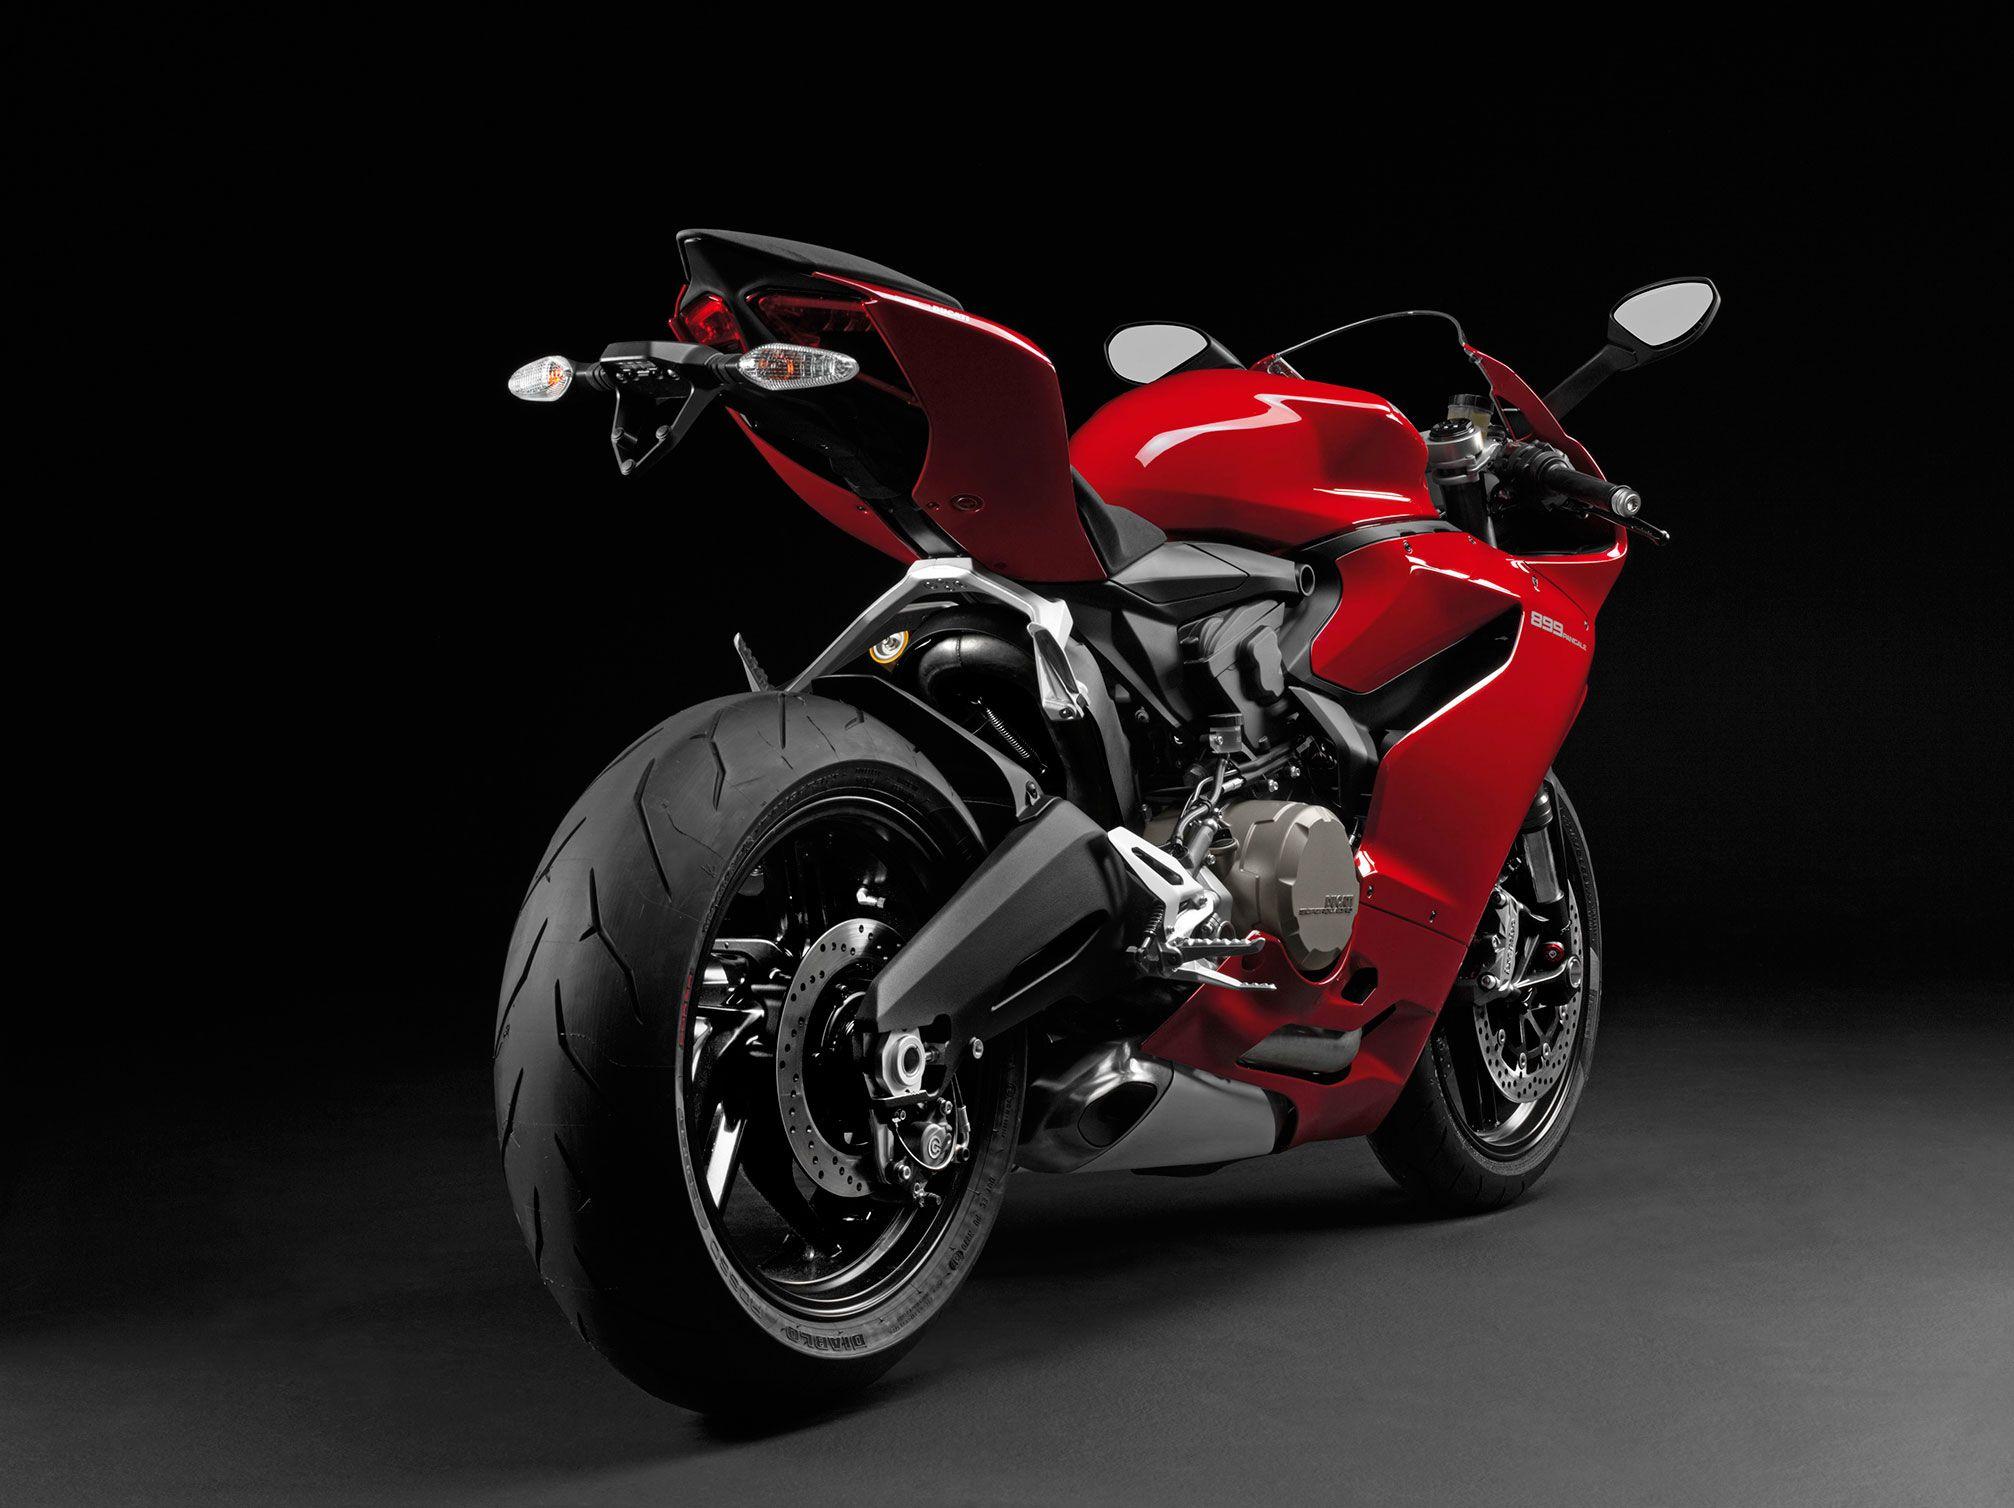 Ducati 899 Panigale BackView 1280x720 Wallpaper. Ducati Superbike